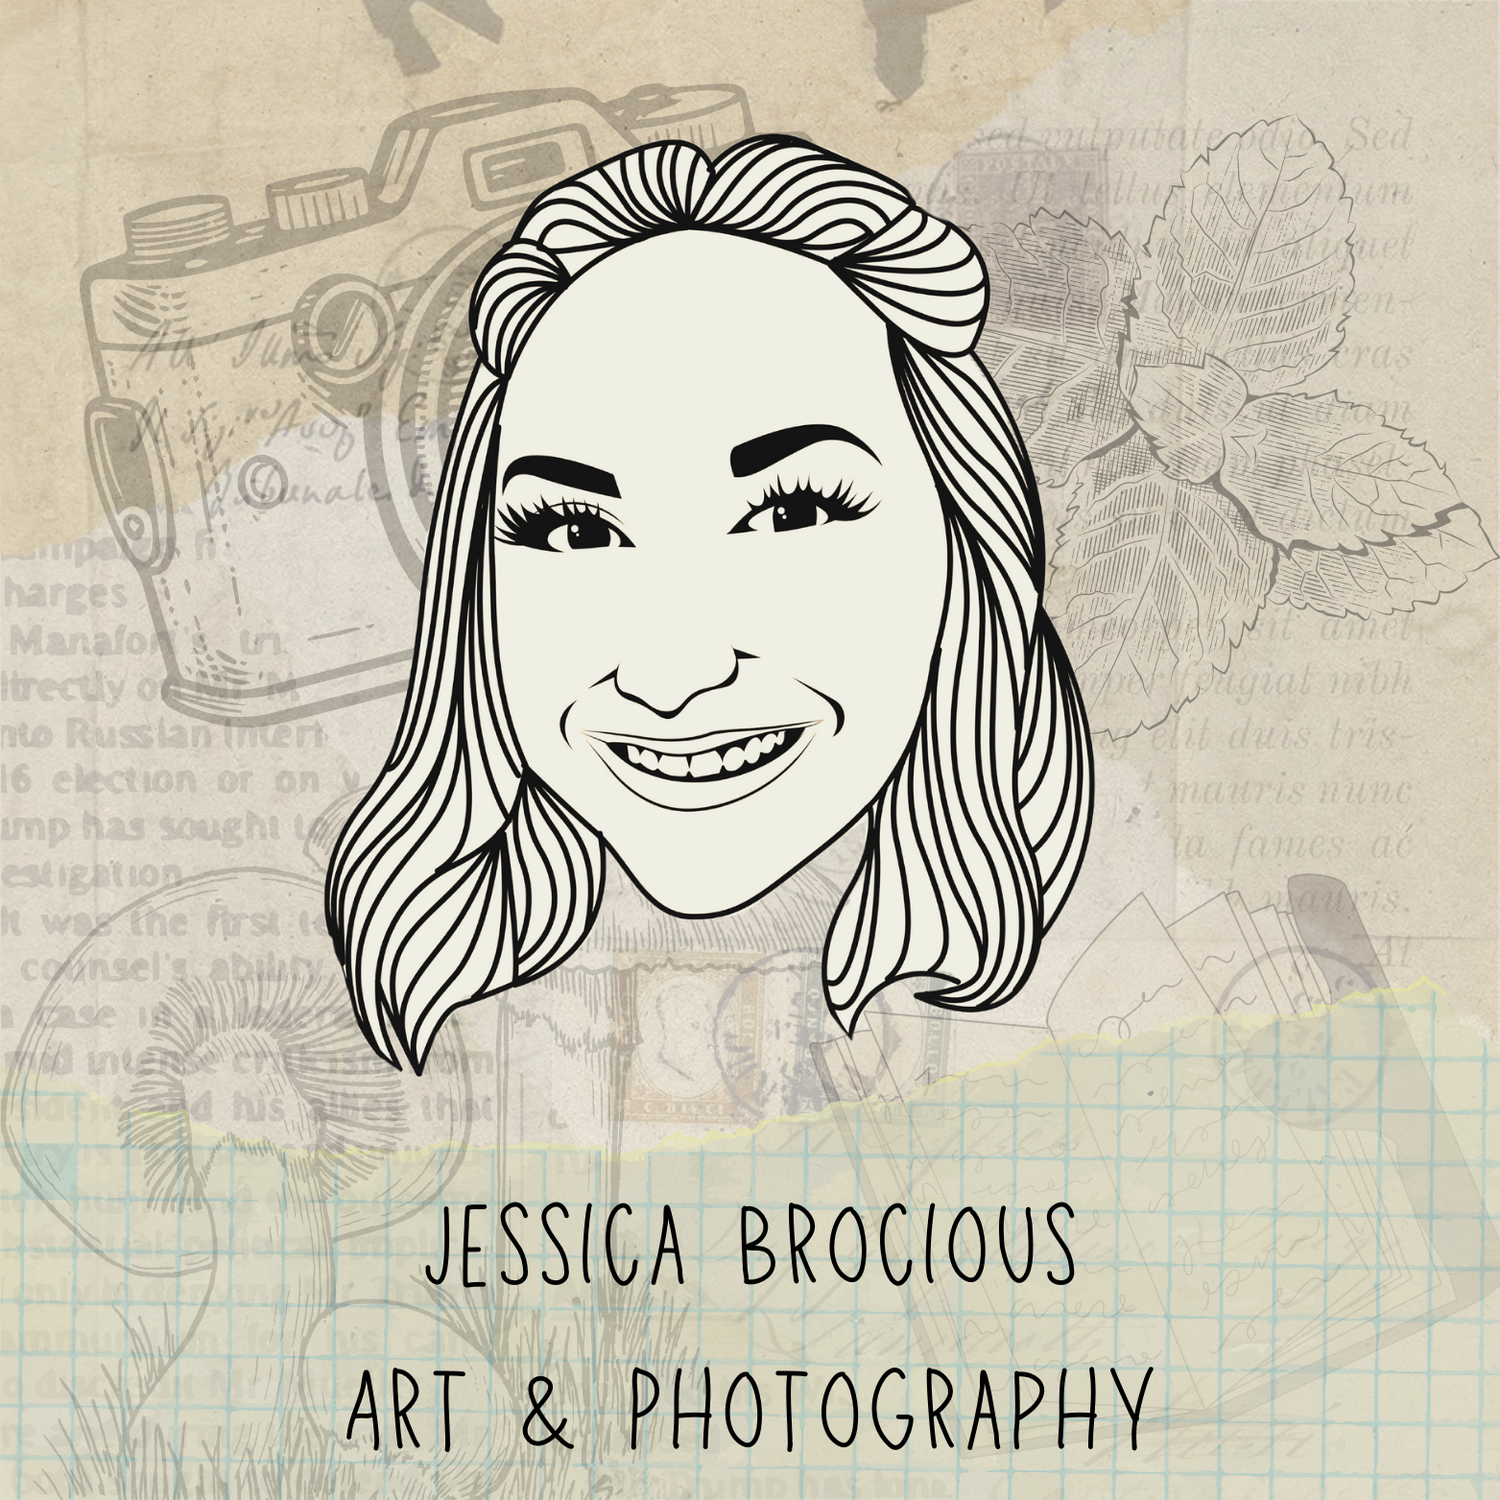 Jessica Brocious Art & Photography